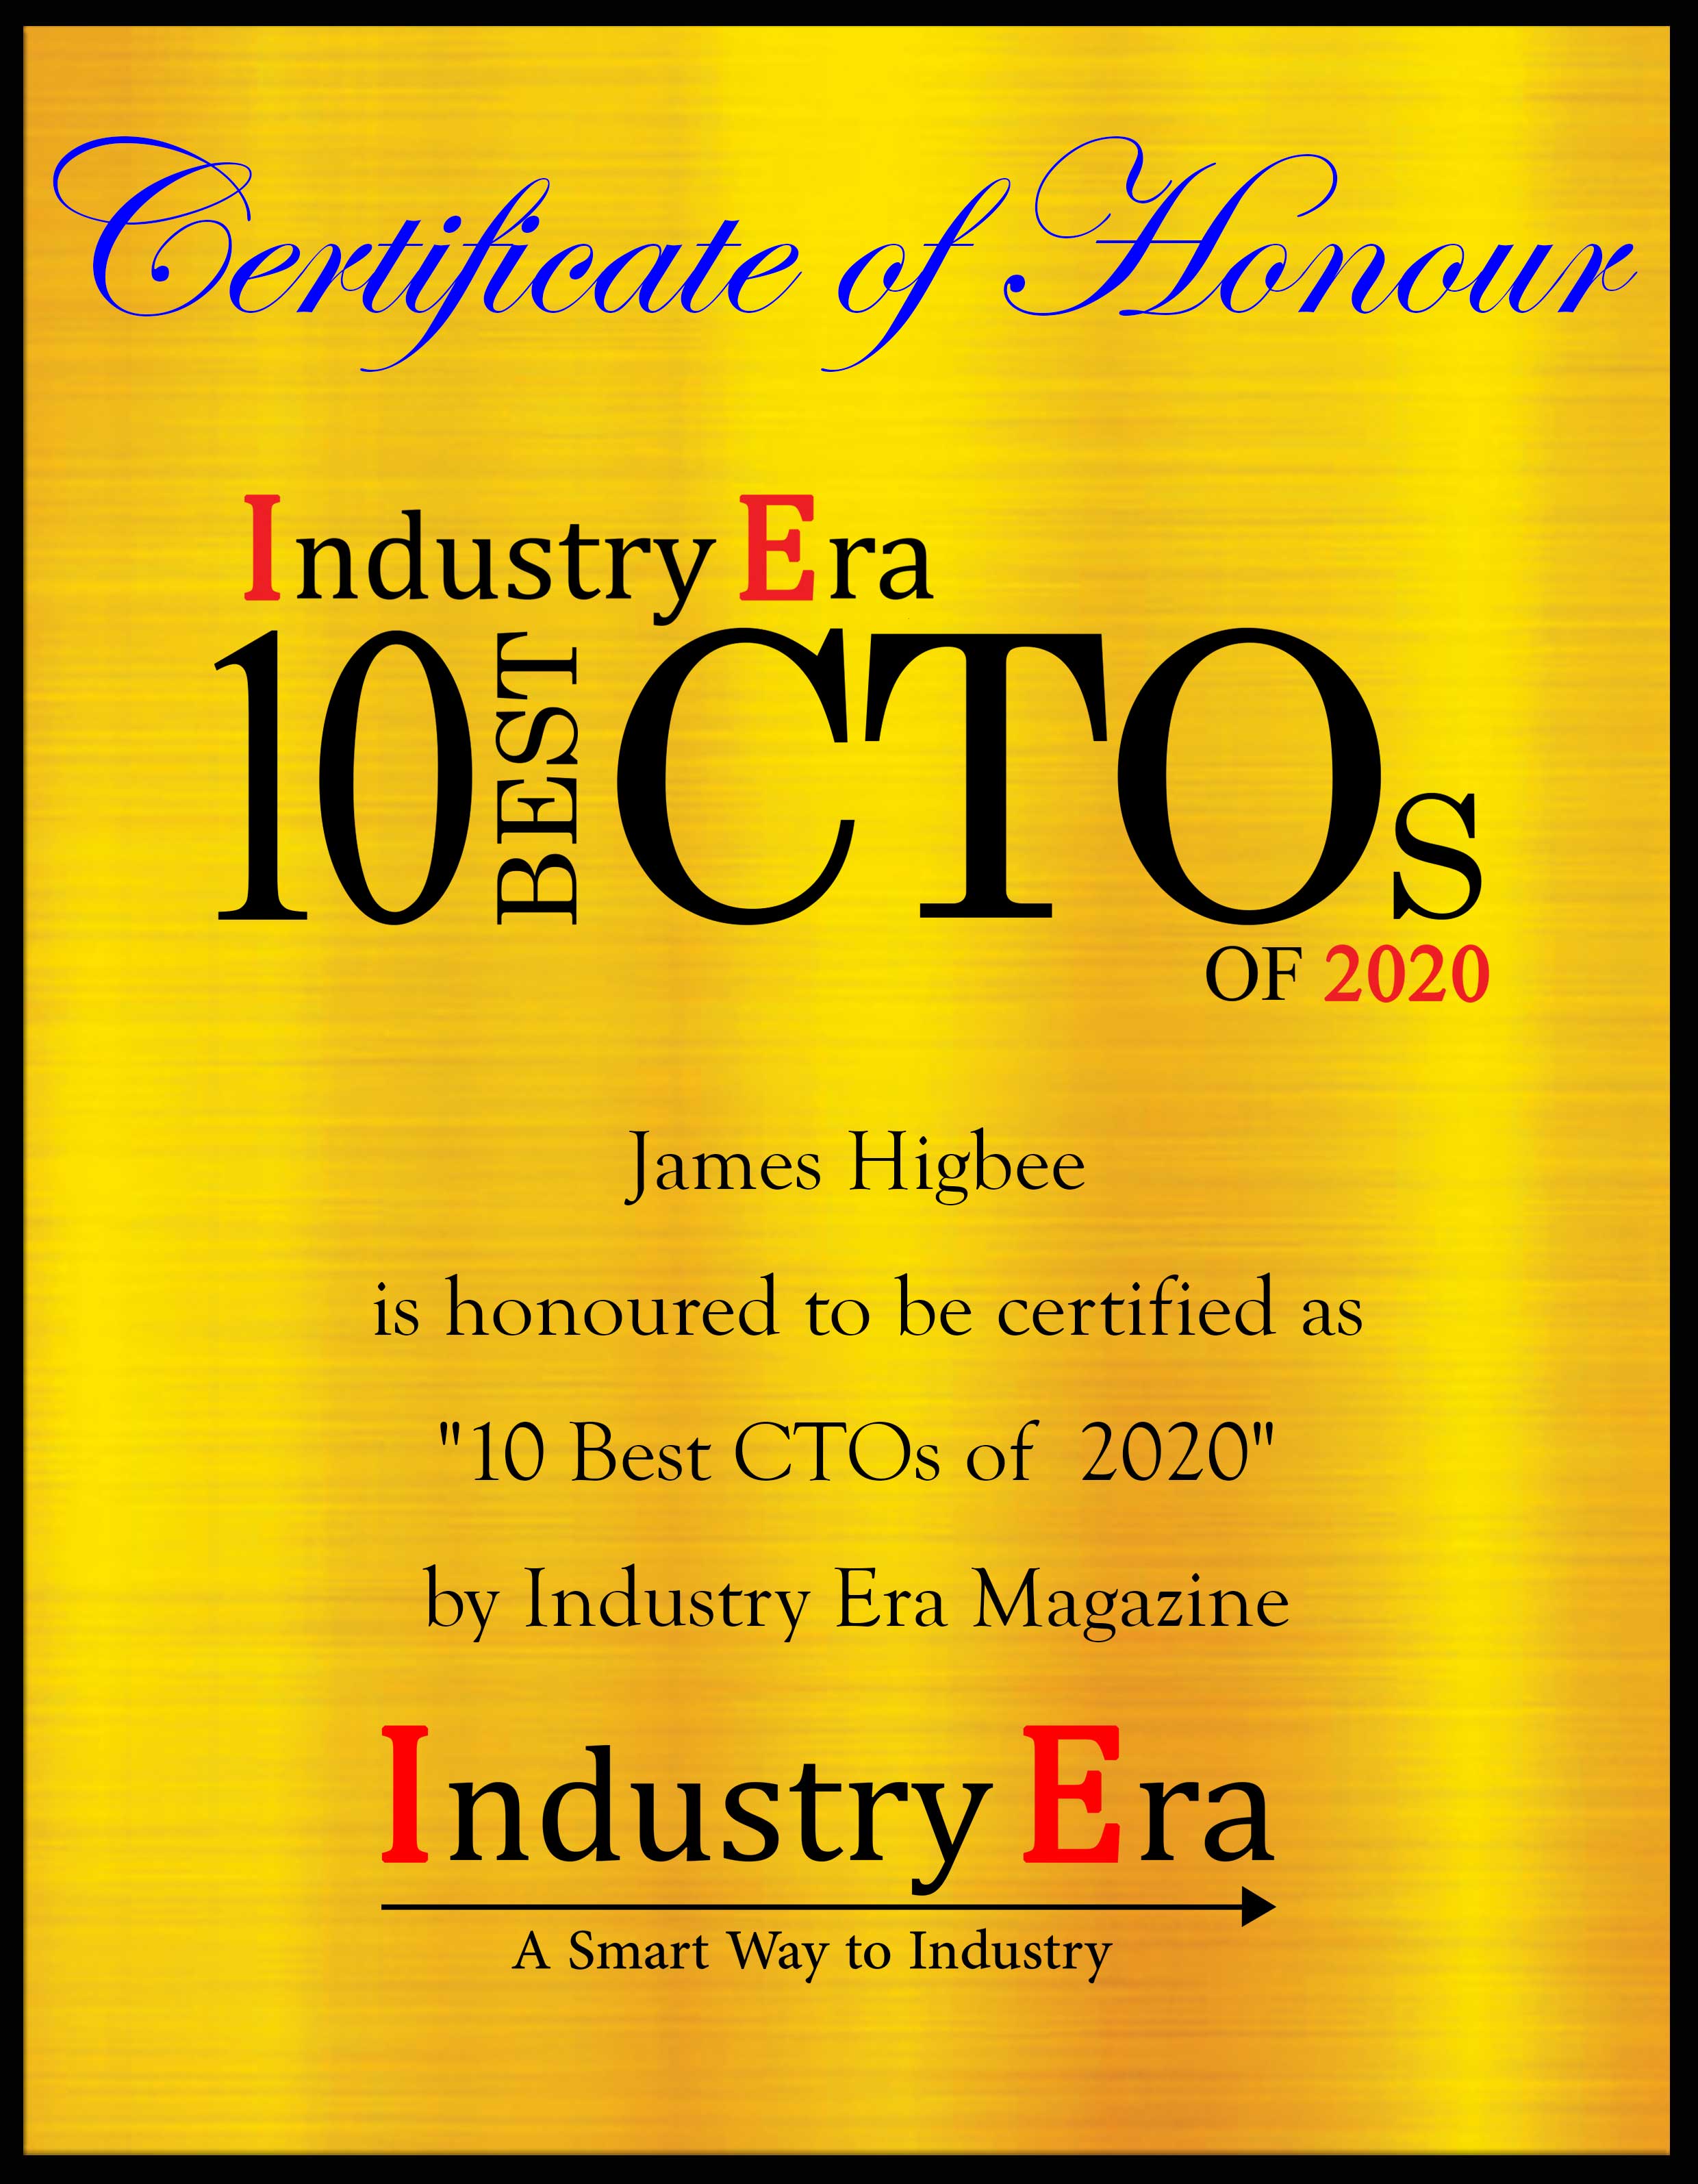 James Higbee CTO The McGRP International Certificate